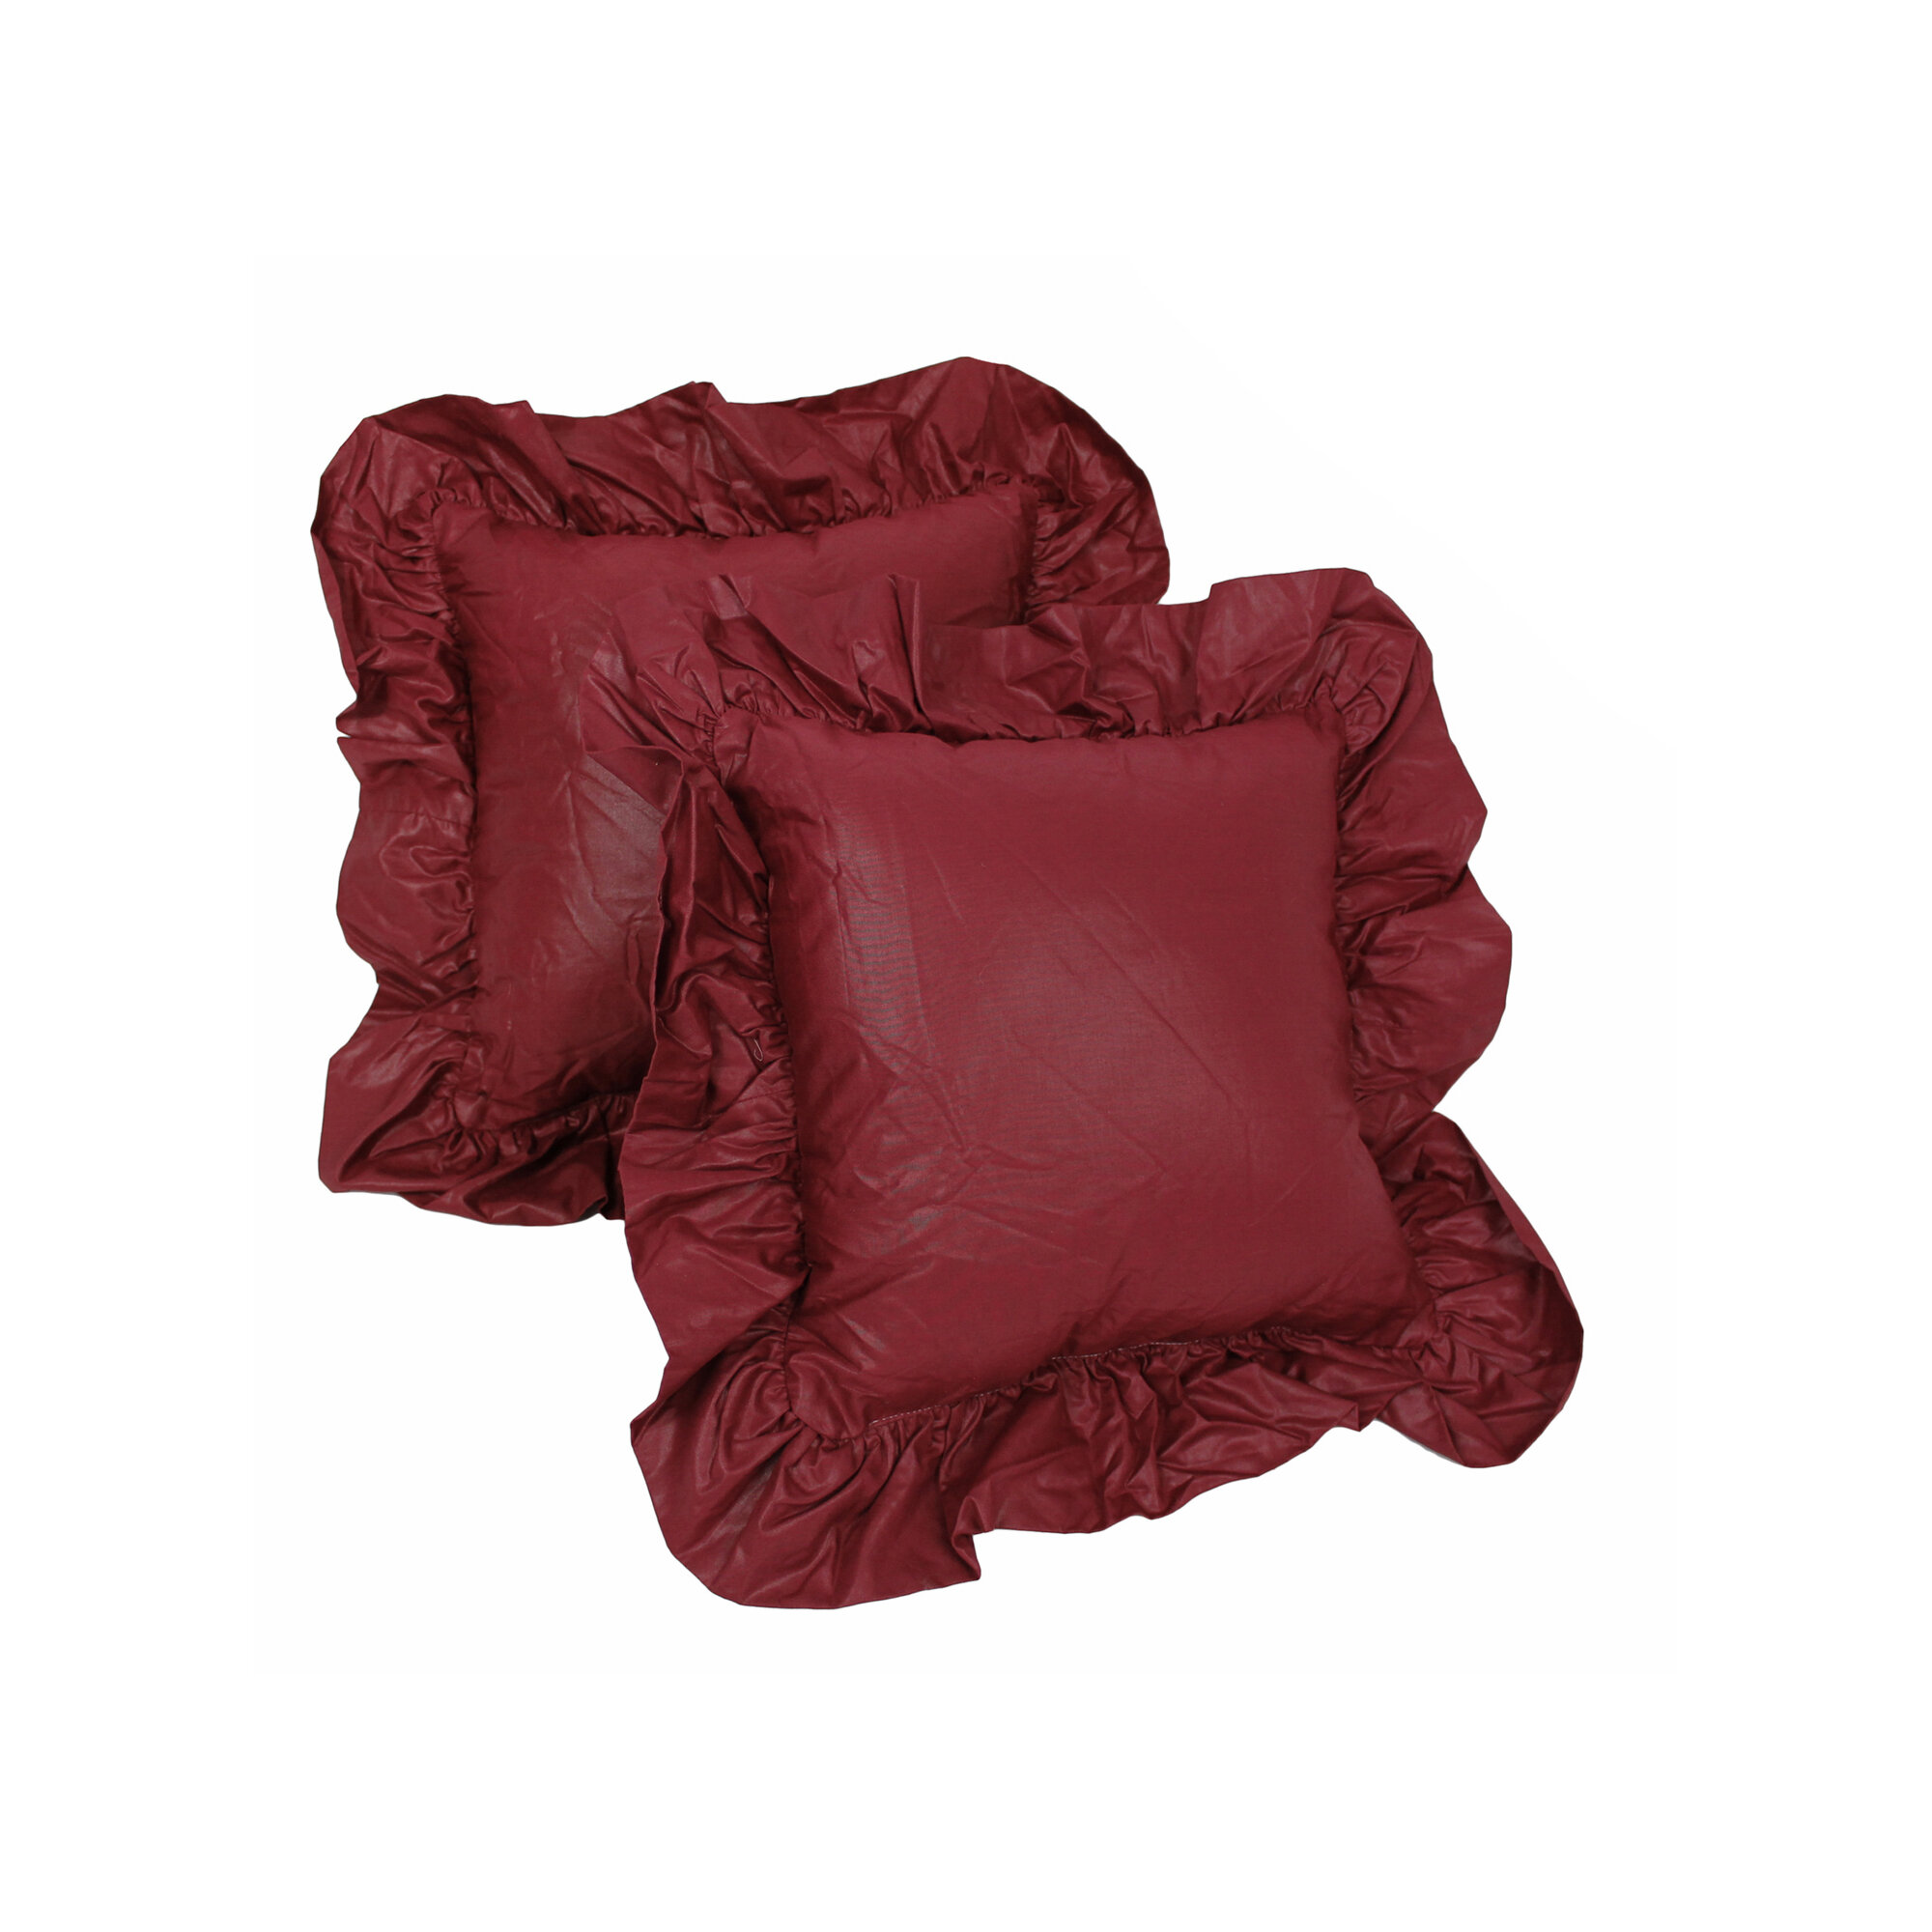 Burgundy Satin Ruffled Edge Throw Pillow Cover with Pillow Insert